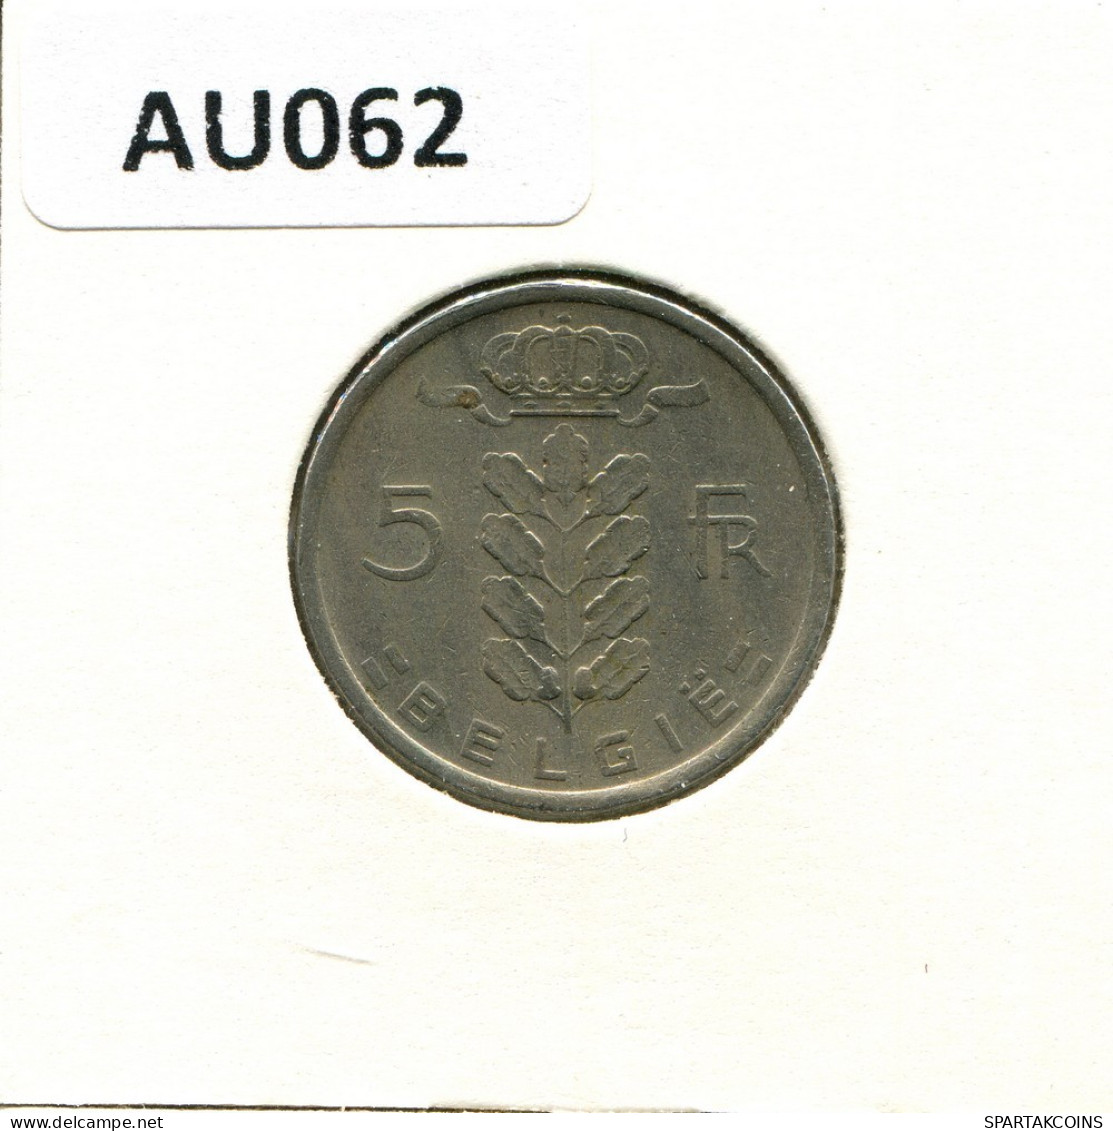 5 FRANCS 1971 DUTCH Text BÉLGICA BELGIUM Moneda #AU062.E.A - 5 Francs